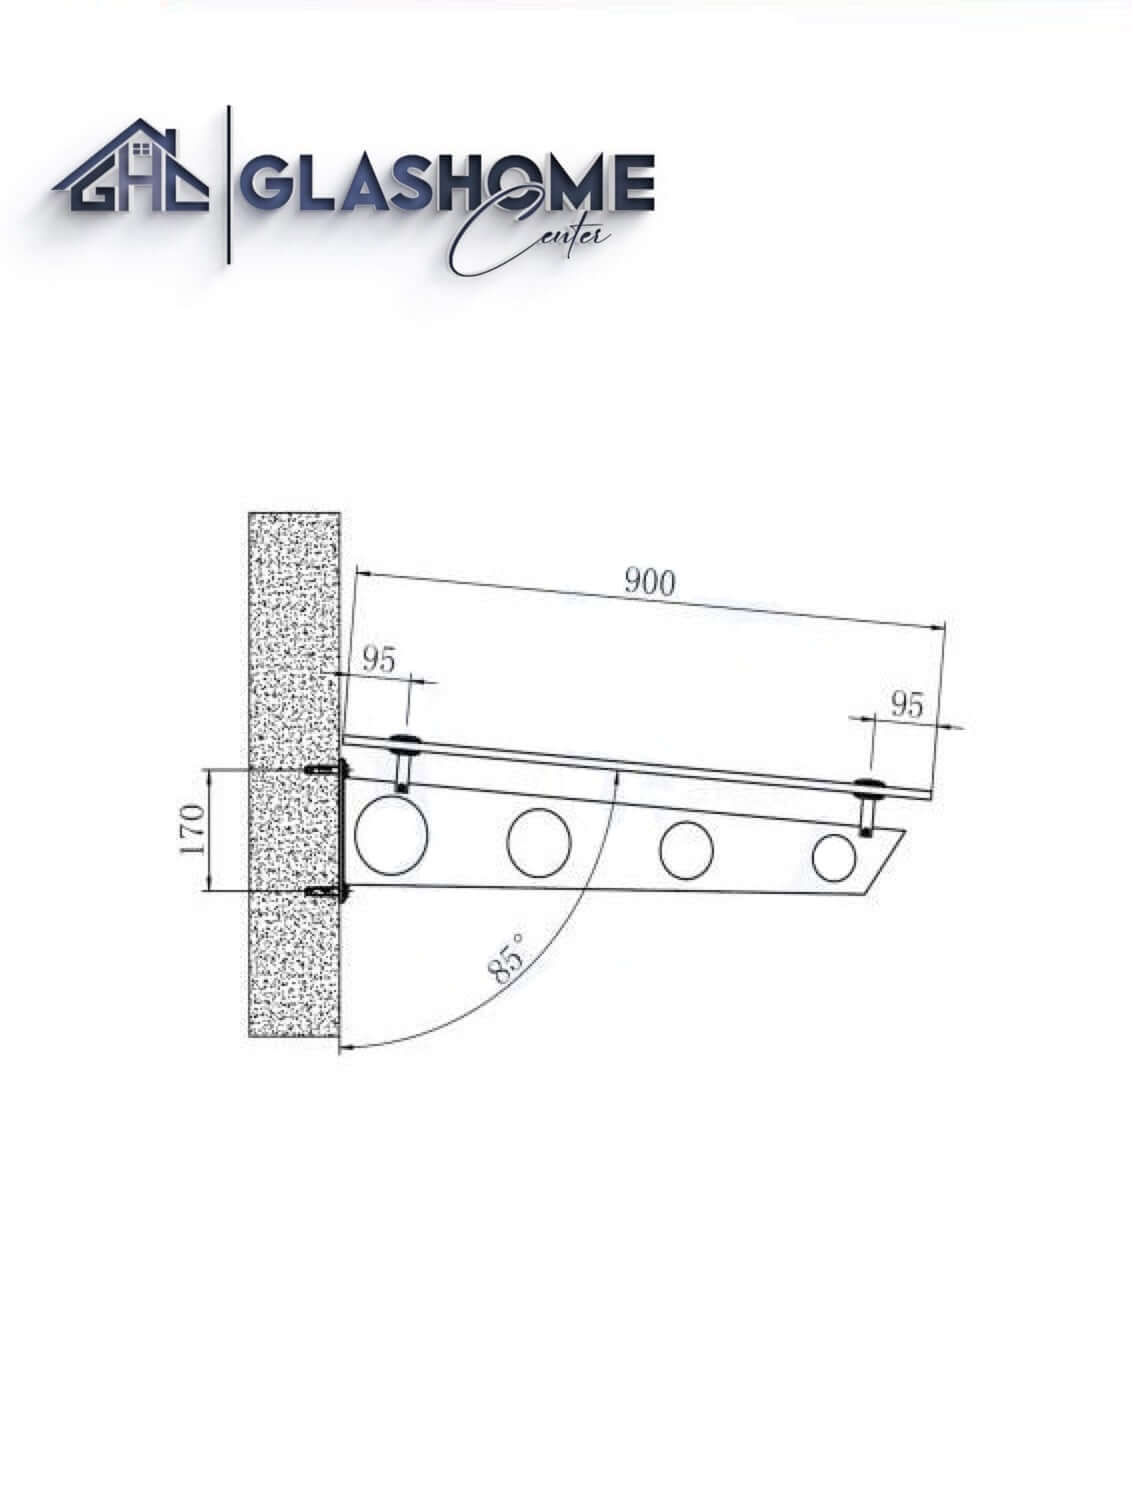 GlasHomeCenter - Glasvordach - Grauglas - 200x90cm - 13.1mm VSG - inkl. 2 Edelstahlhalterungen Variante "Stockholm"